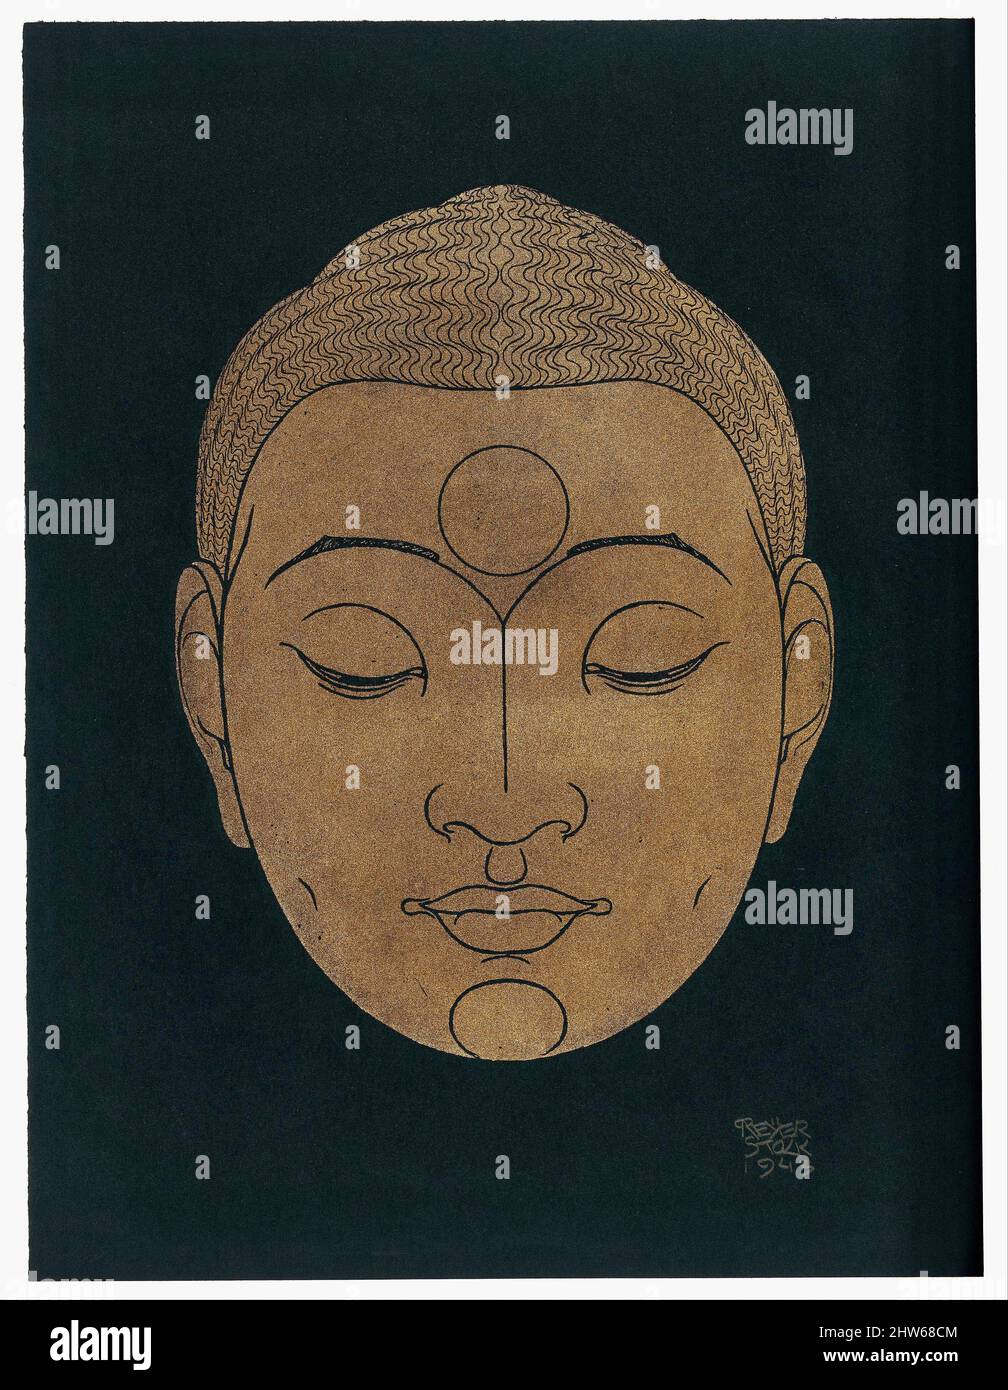 Reijer Stolk - Head of the Buddha - 1943 Stock Photo